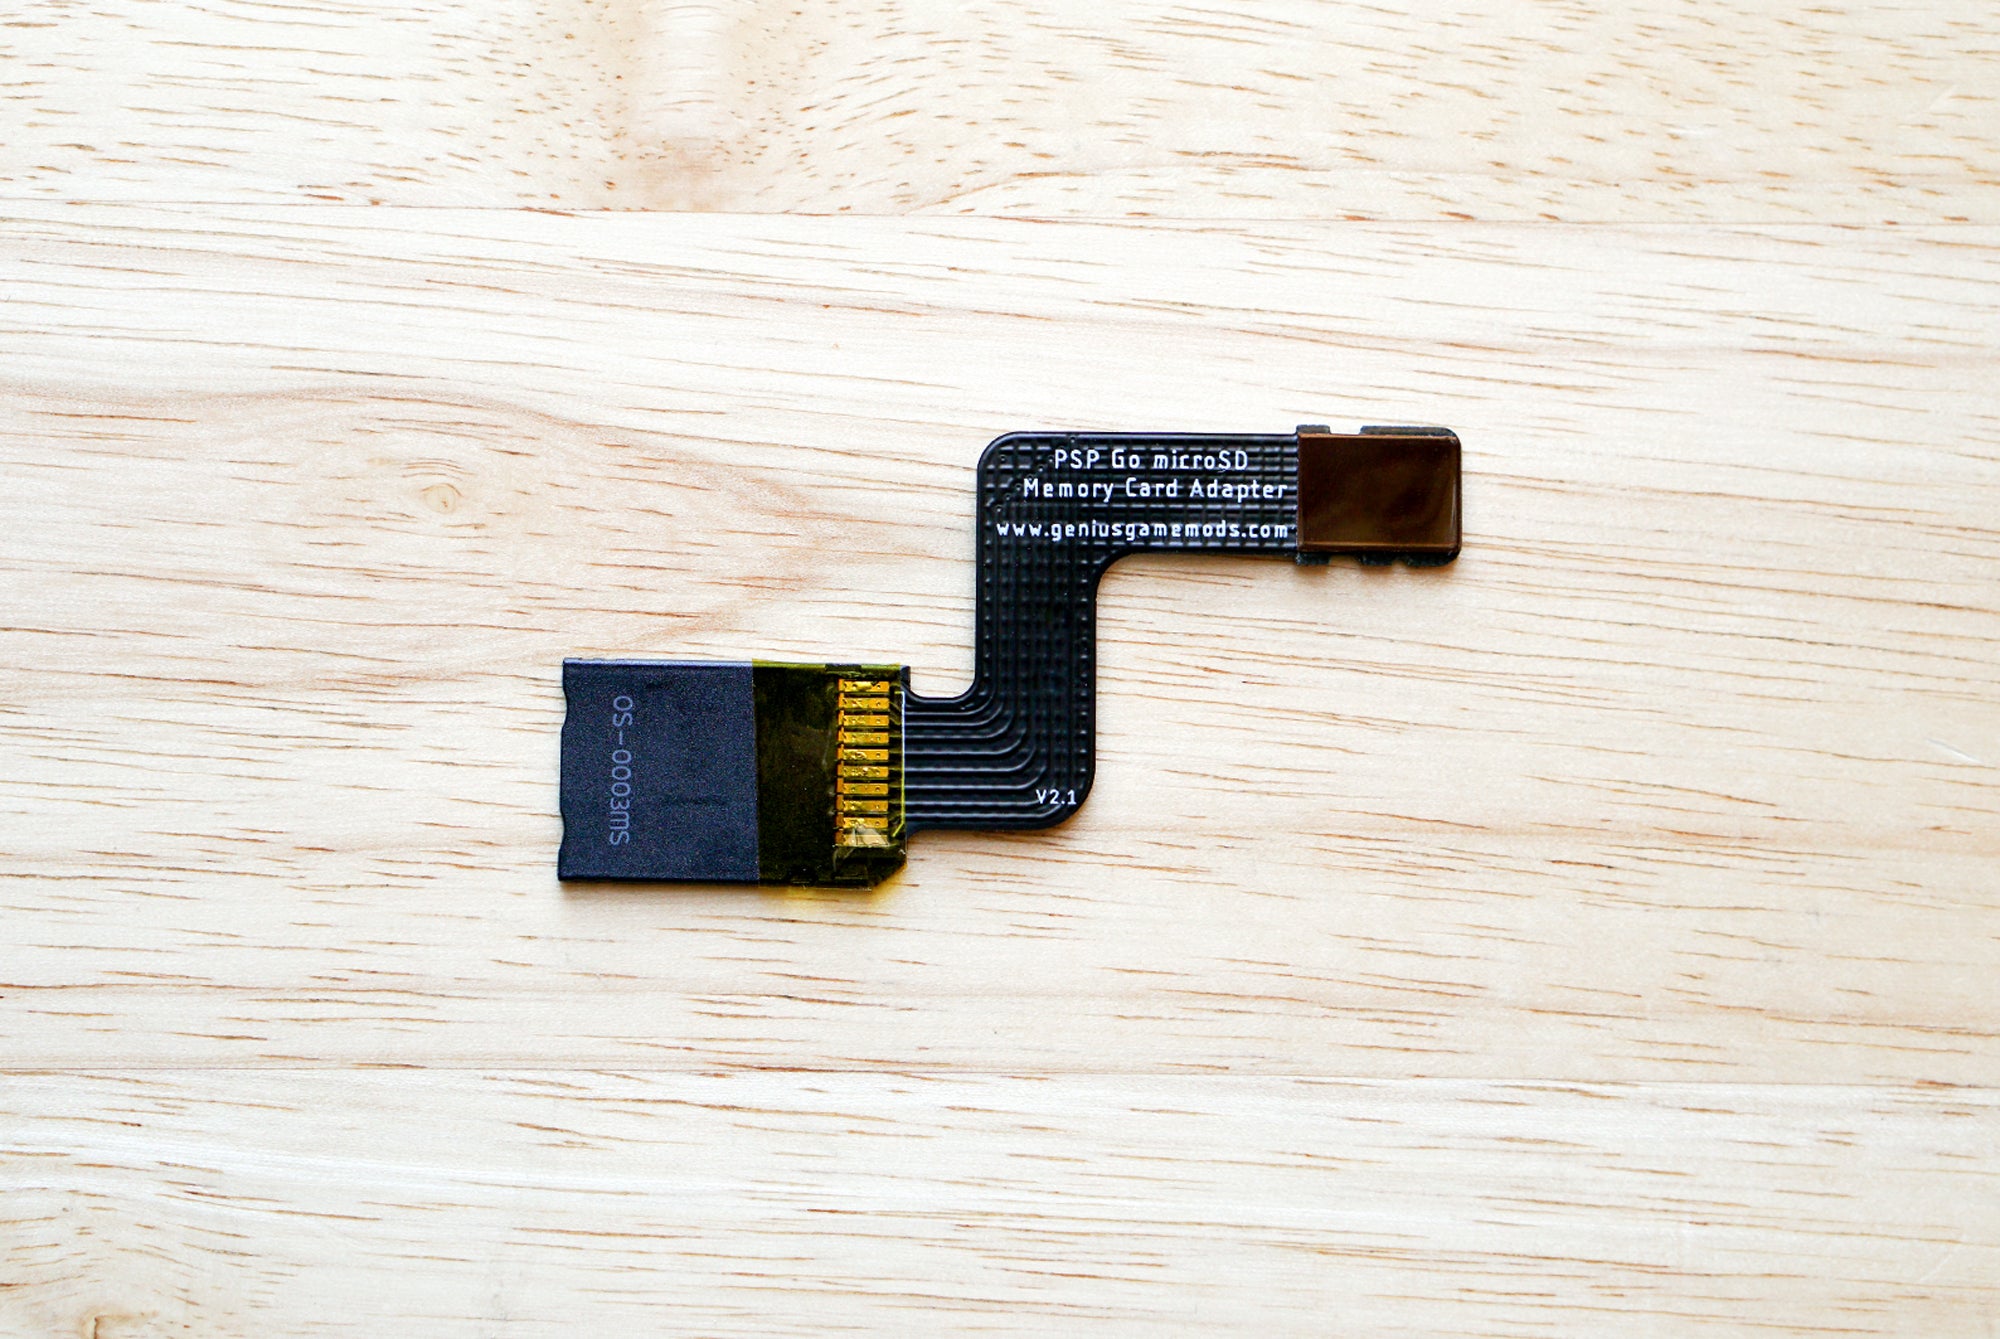 PSP Memory Stick, Micro SD Card Adapter Setup! 